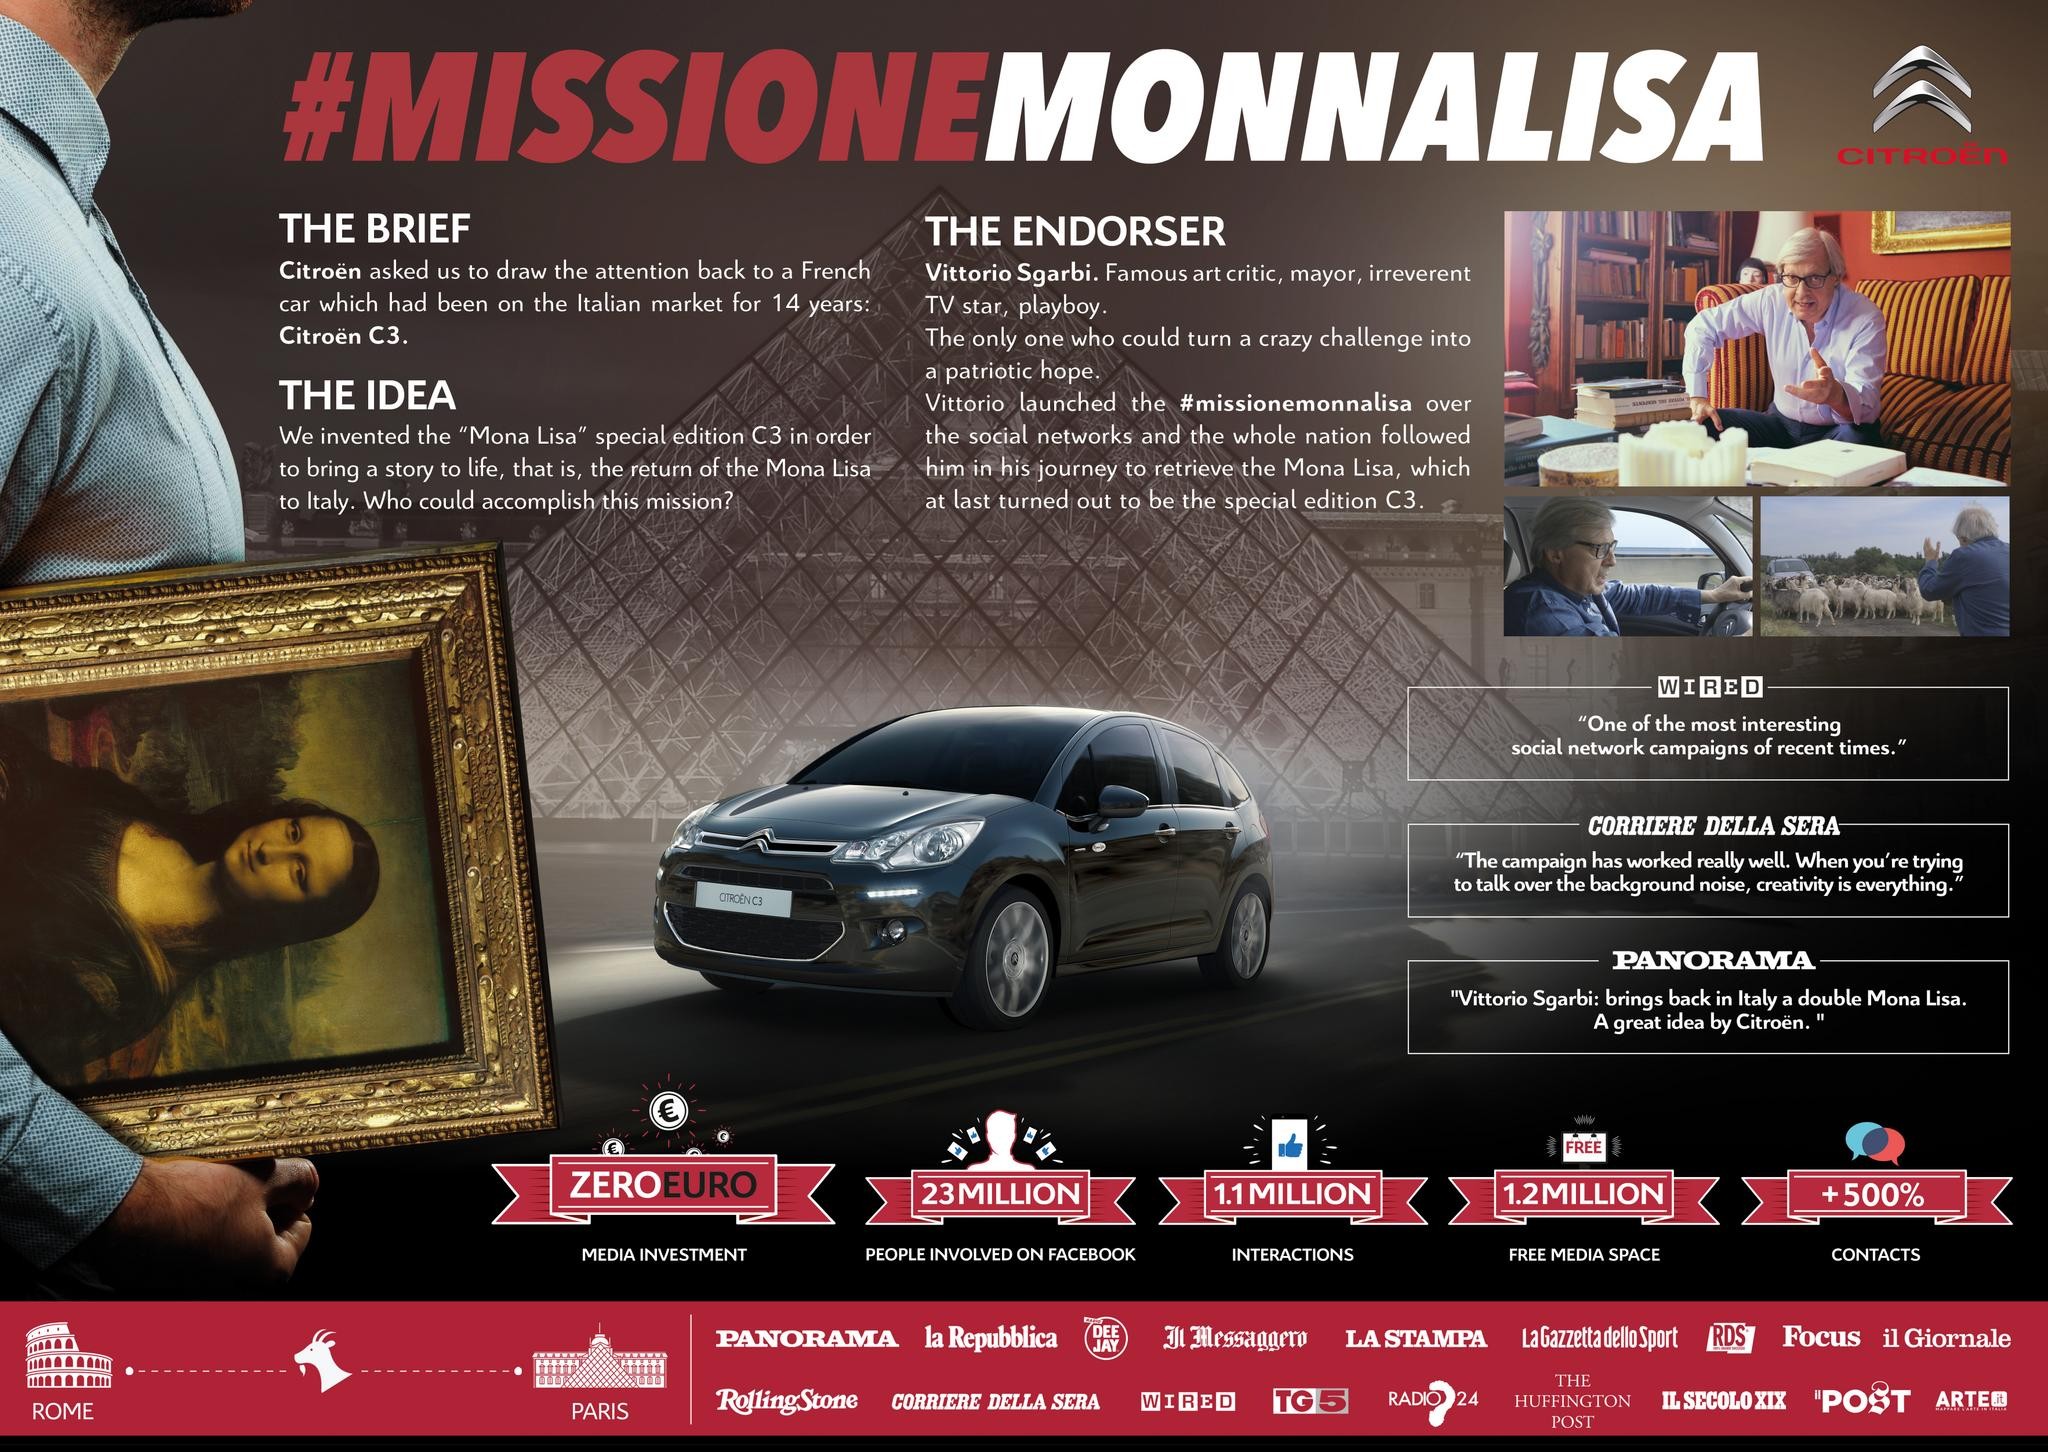 #missionemonnalisa